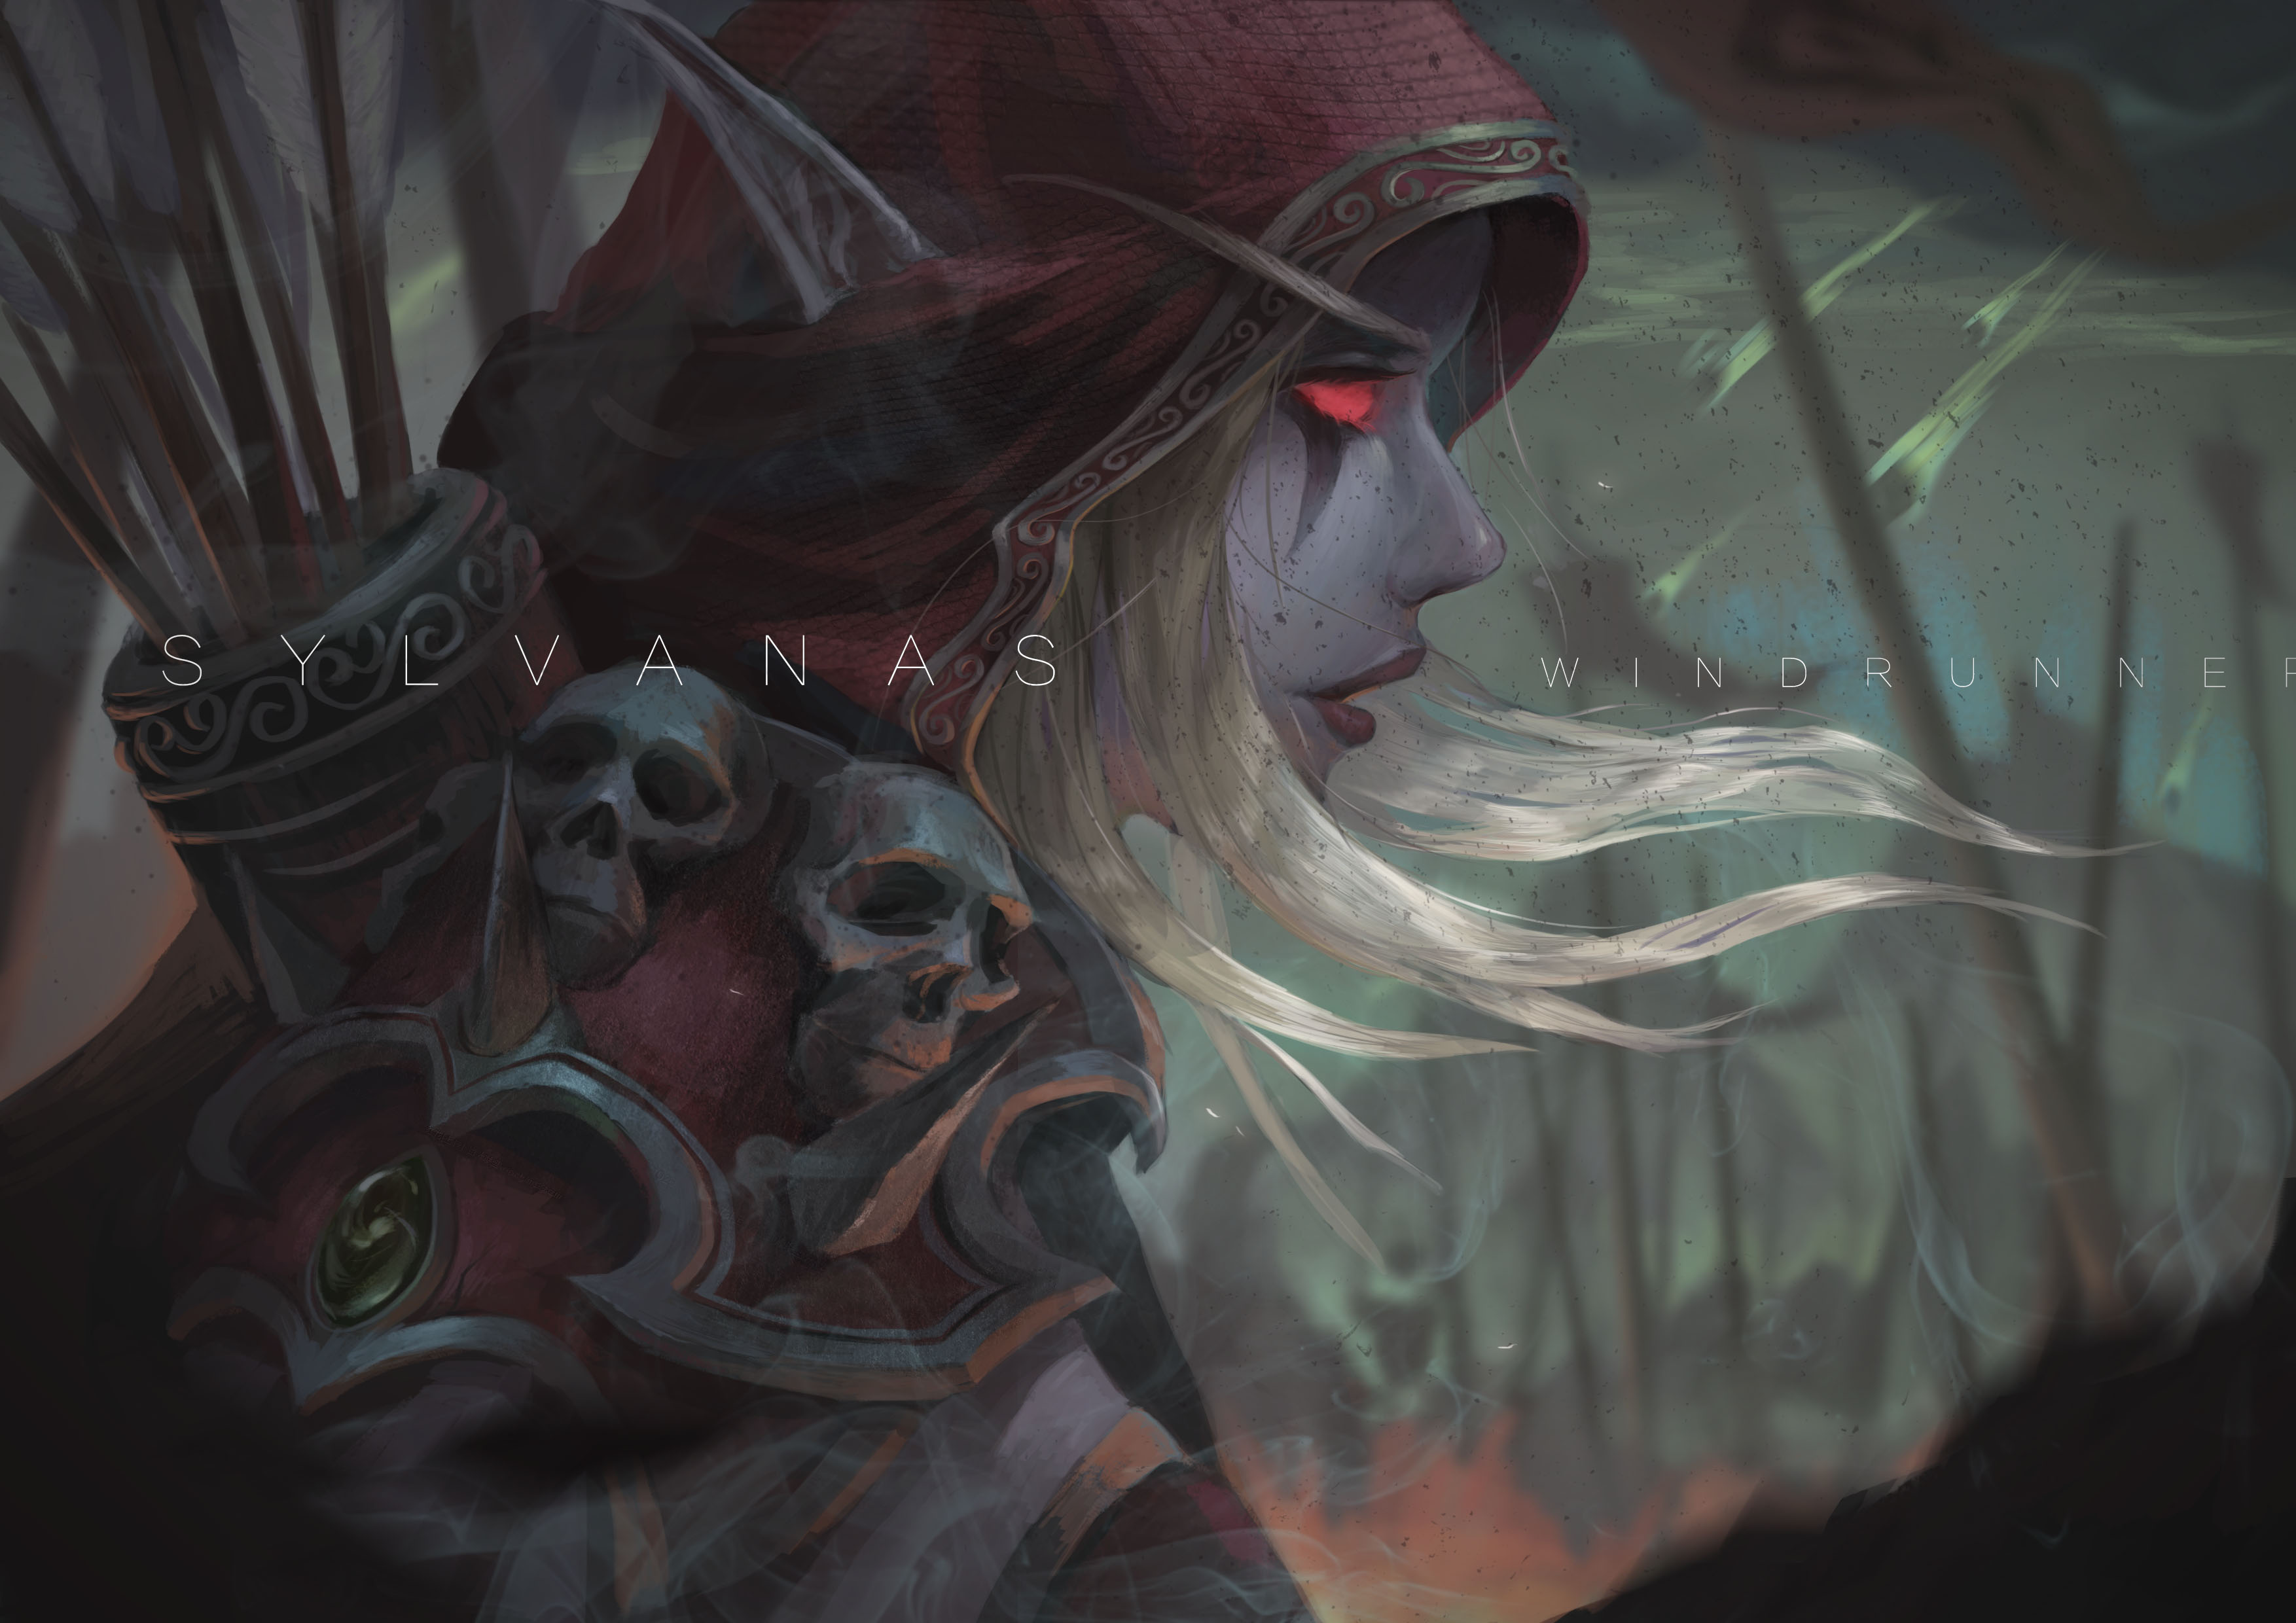 Video Game Warcraft HD Wallpaper | Background Image